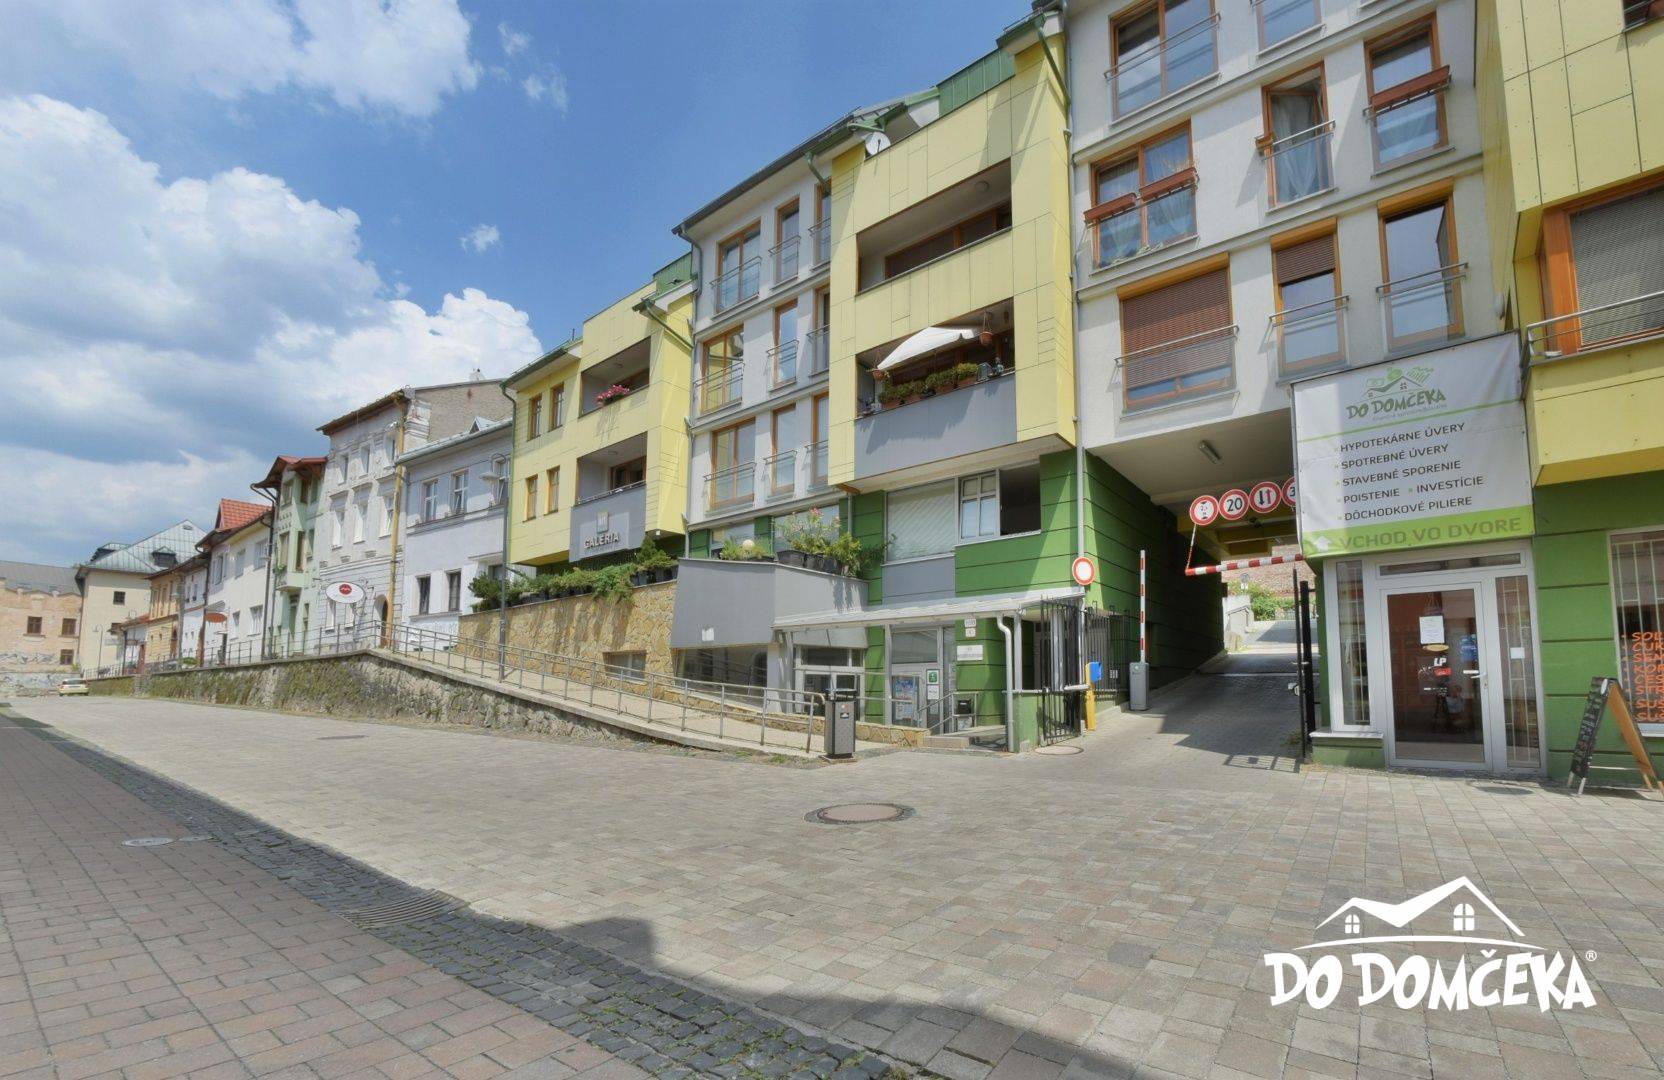 Atraktívny jednoizbový byt v centre mesta Banská Bystrica